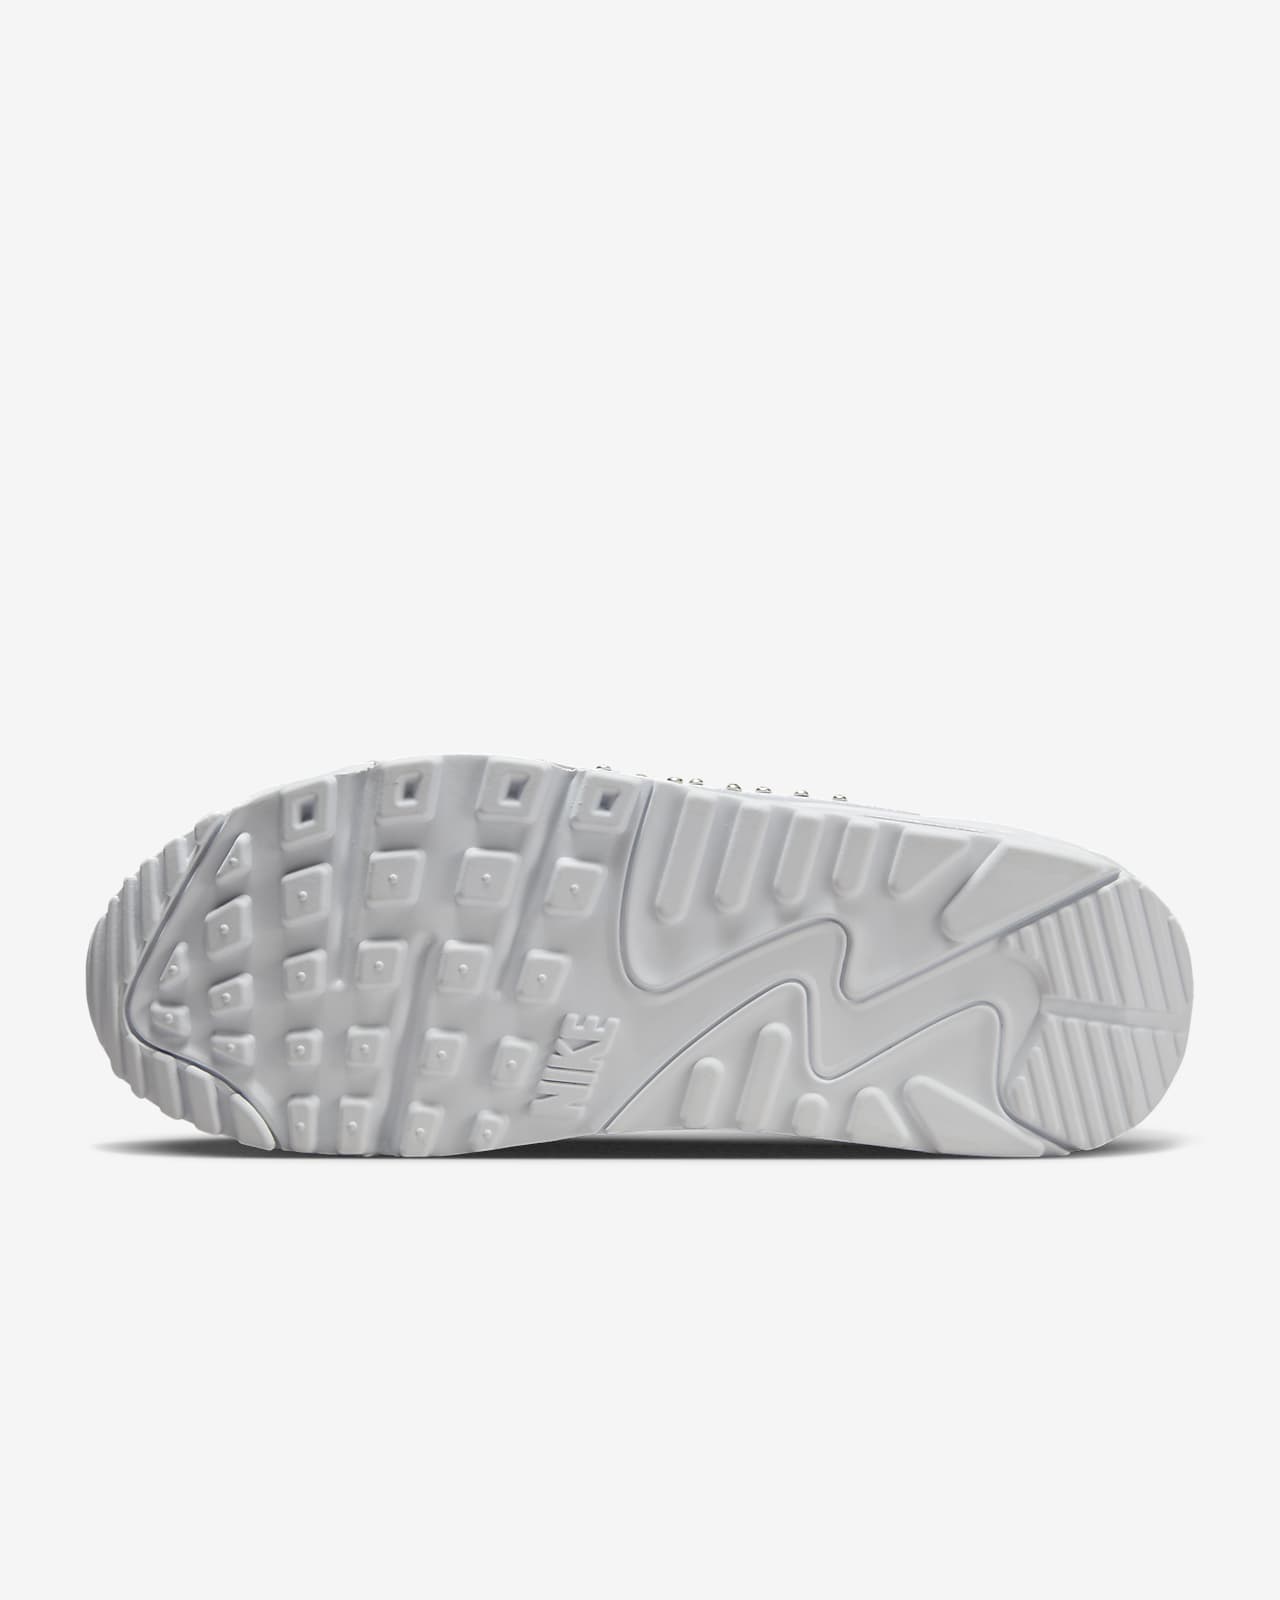 Sneakers Release – Nike Air Max 90 Futura “White/Bright  Crimson-Fuchsia Dream” Women’s Shoe Launching 3/1